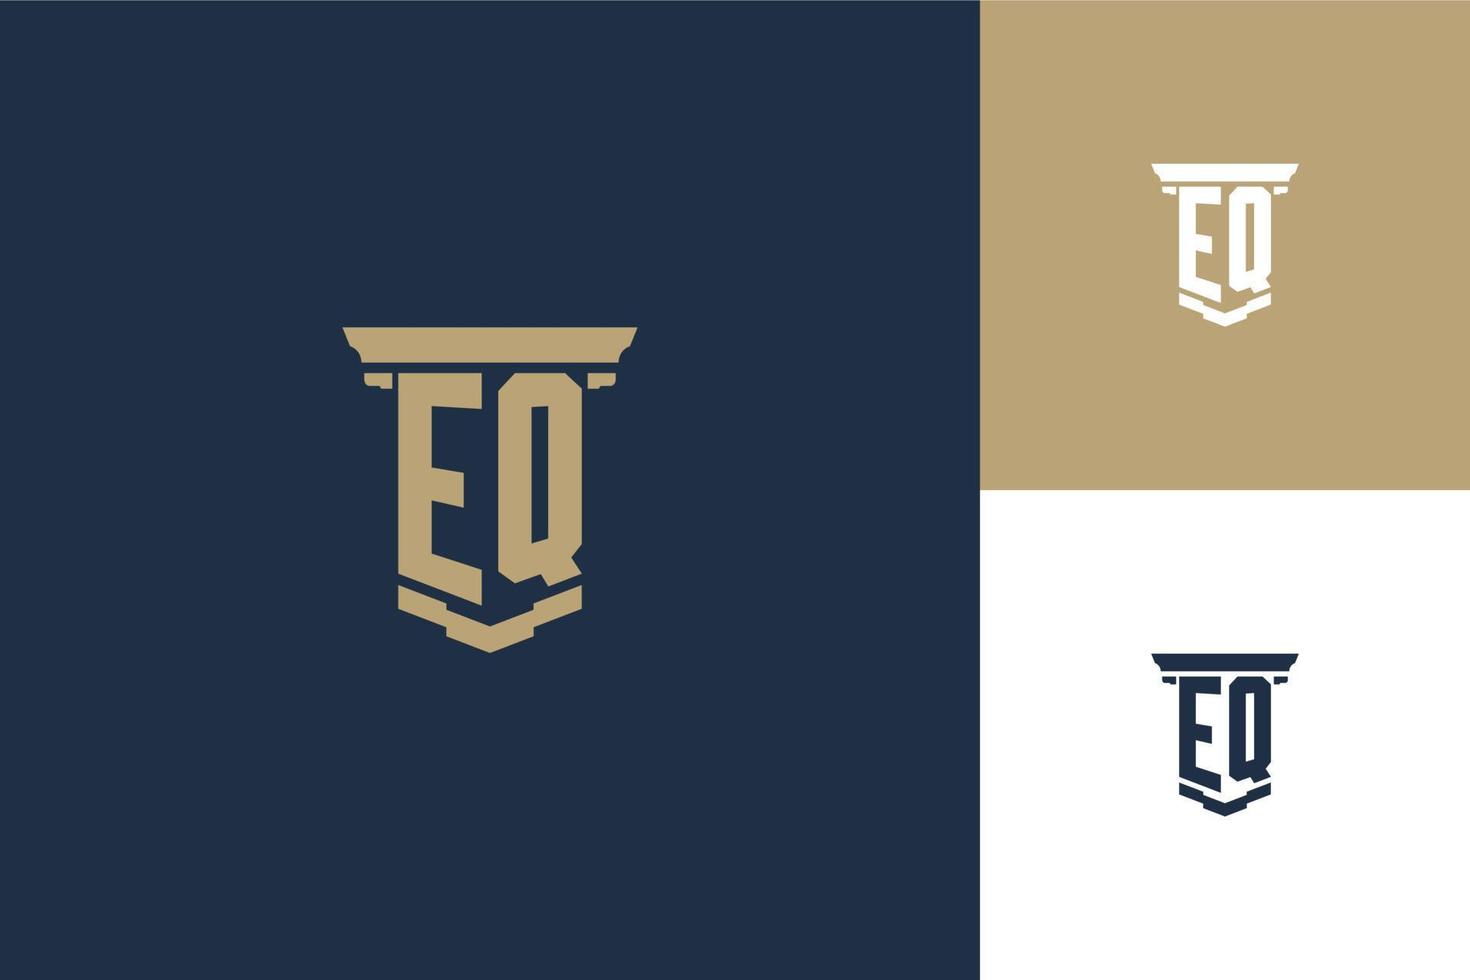 eq monogram initialer logotyp design med pelare ikon. advokatlogotypdesign vektor